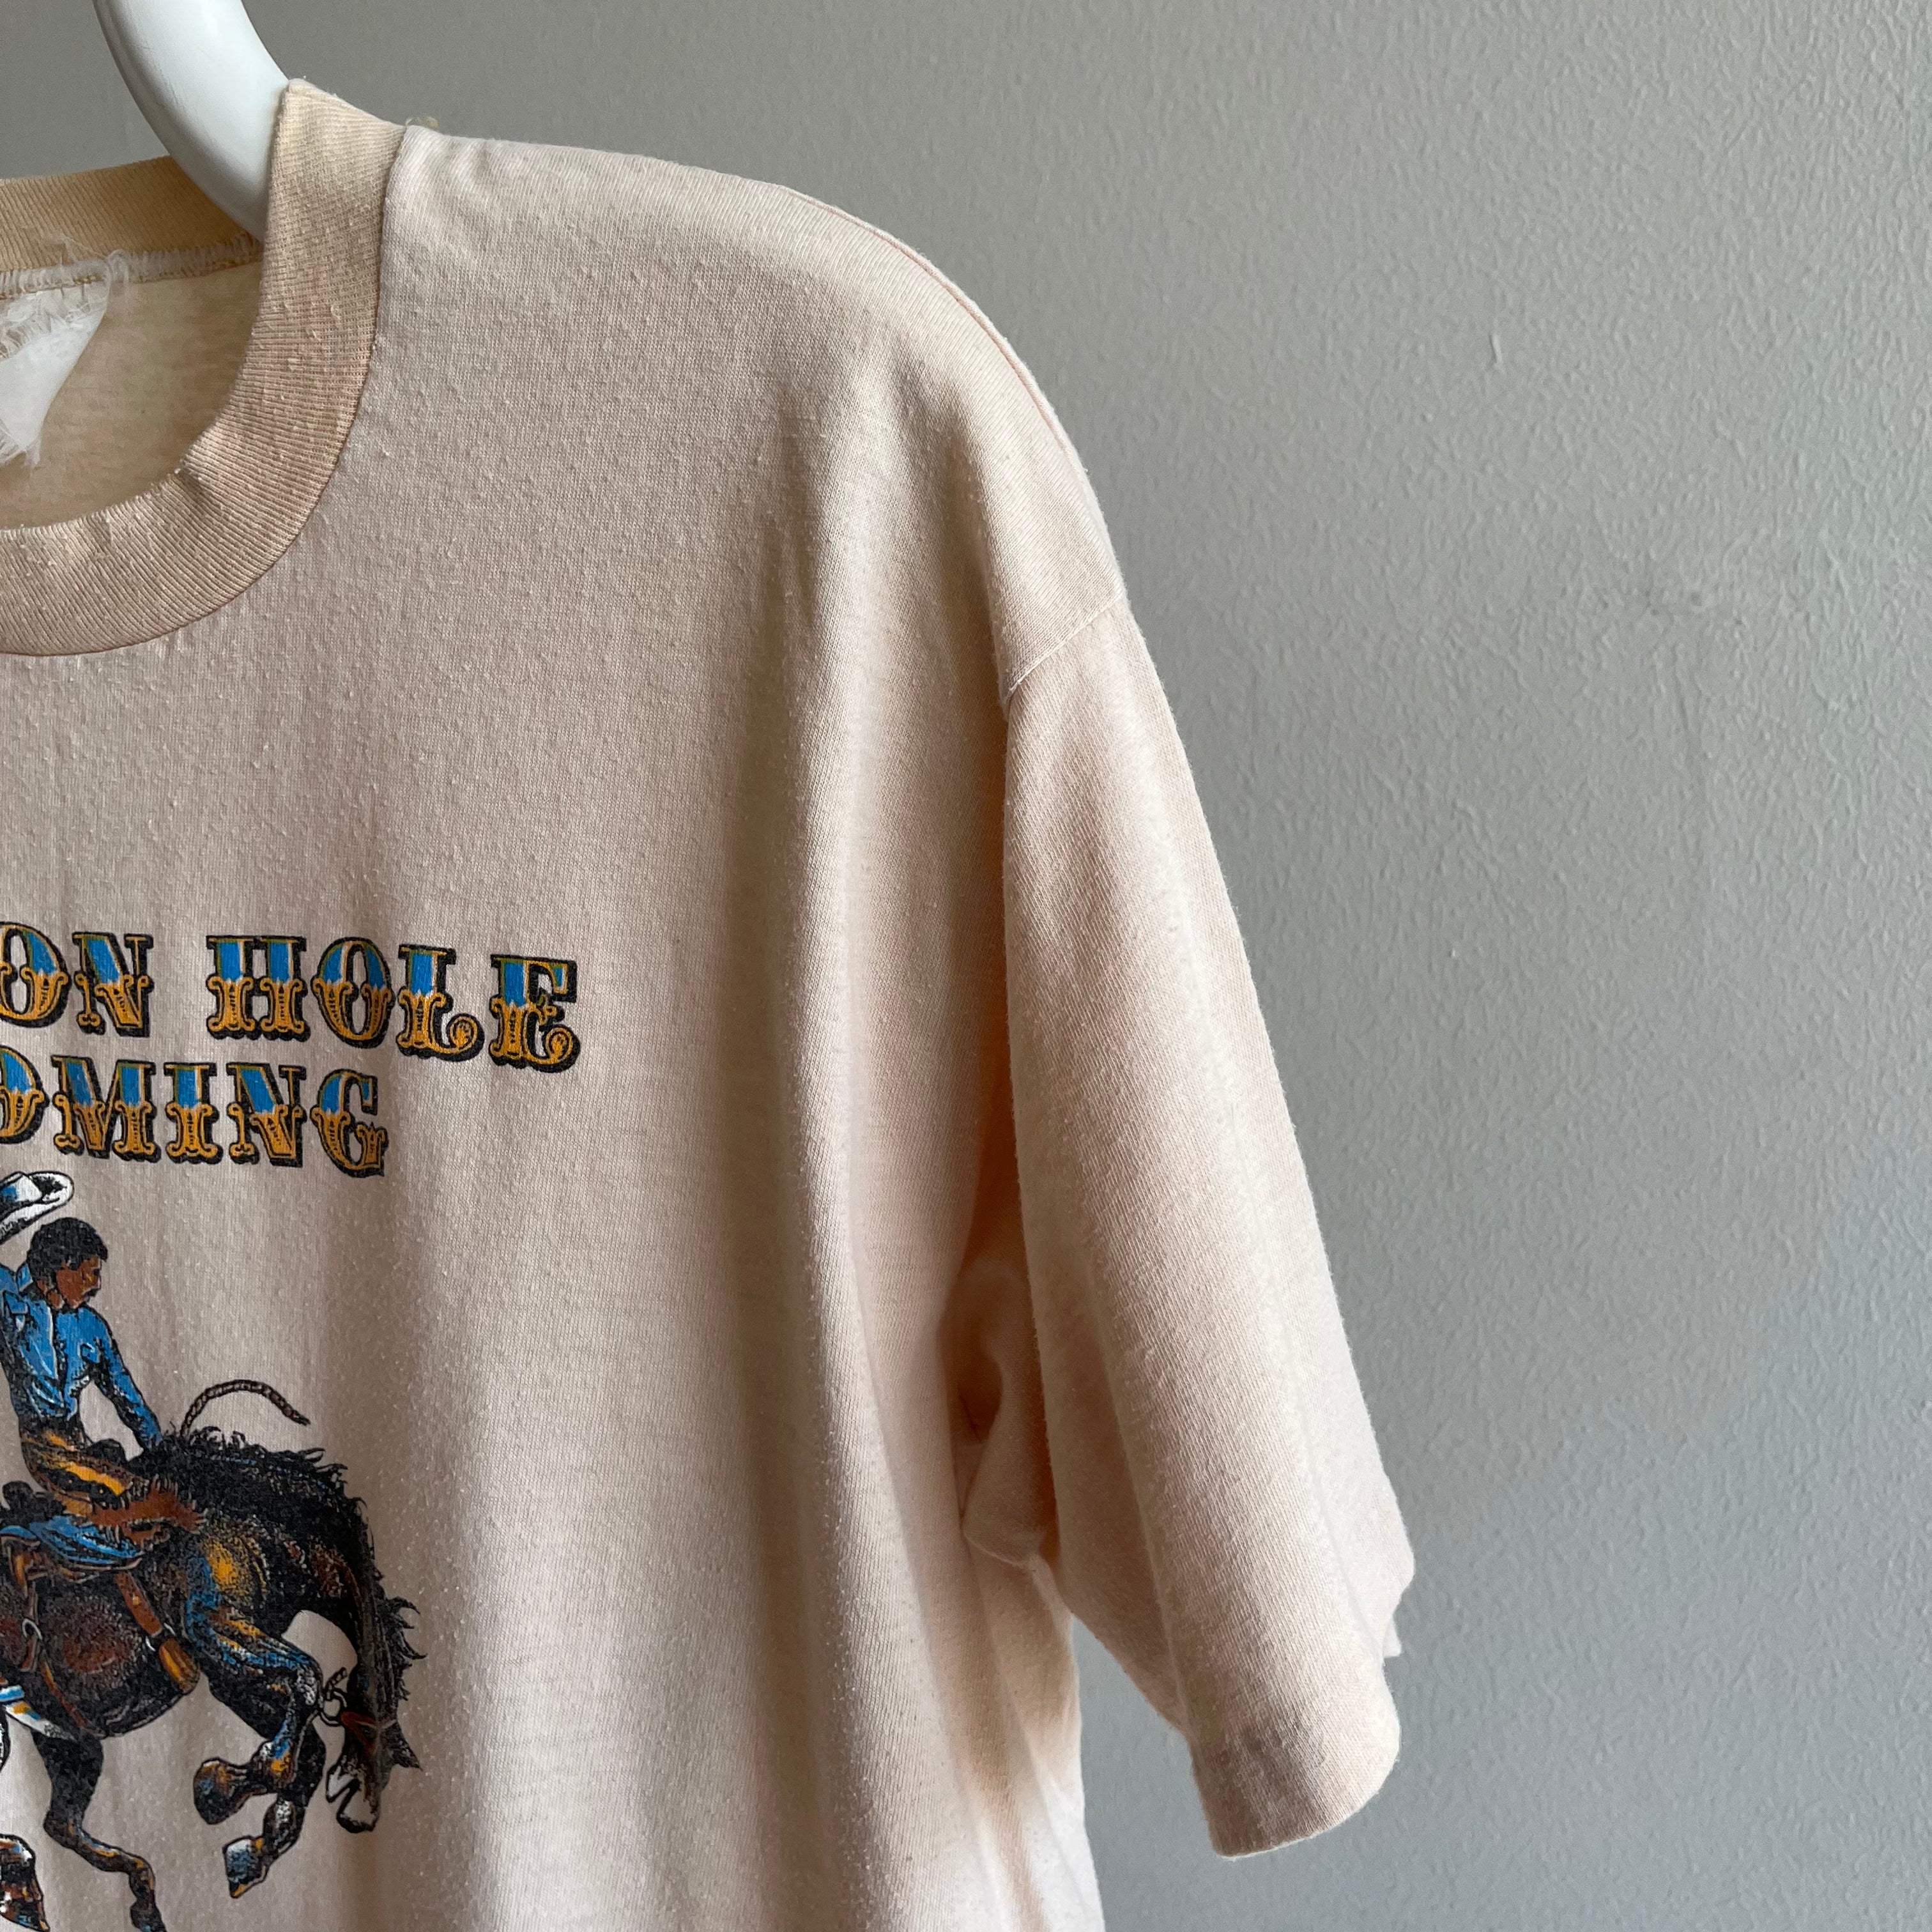 T-shirt Jackson Hole des années 1970/80, Wyoming Epic Bucking Bronco - SWOOOON